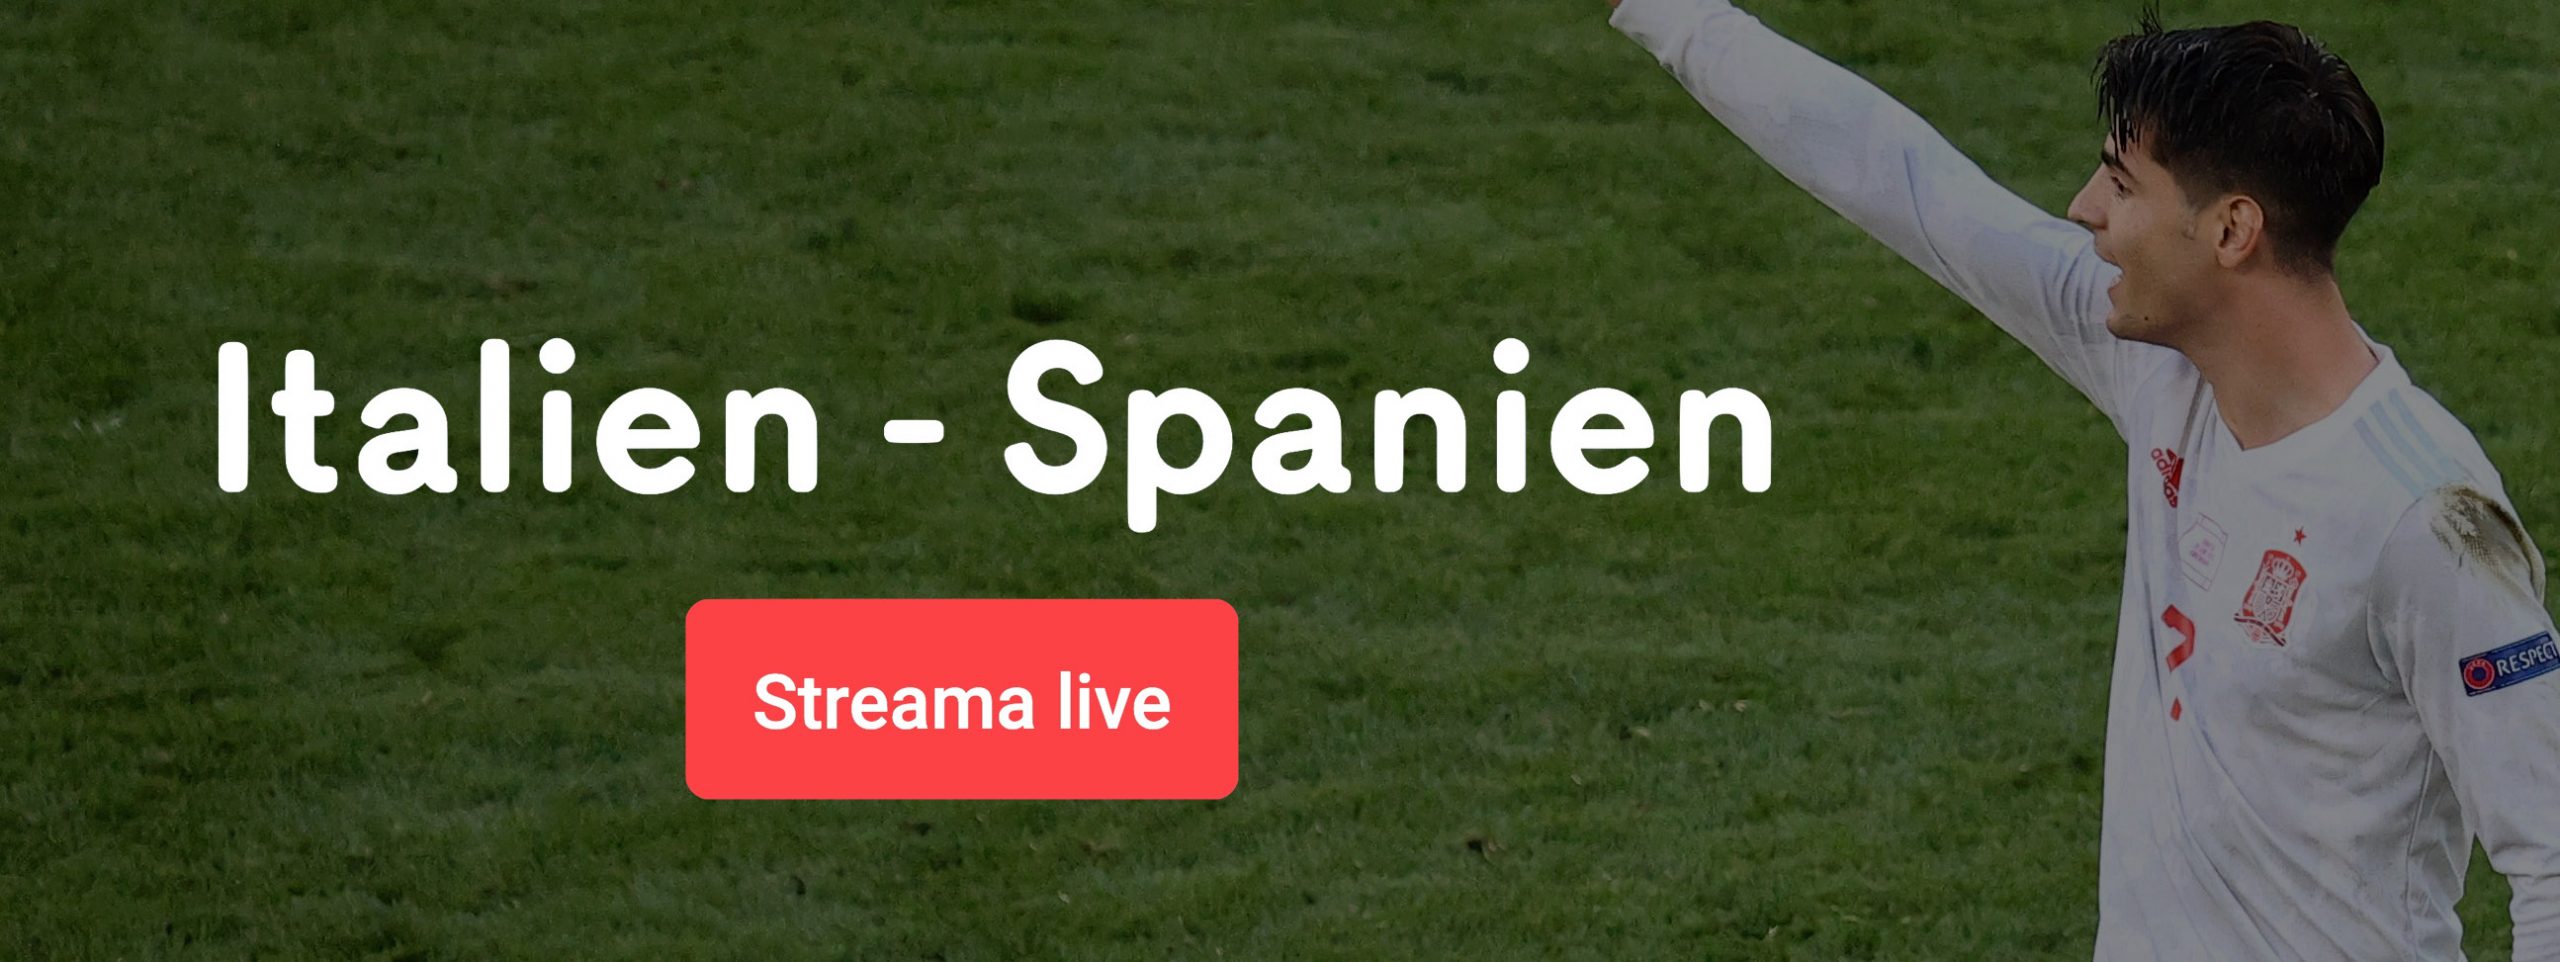 Italien Spanien live stream gratis